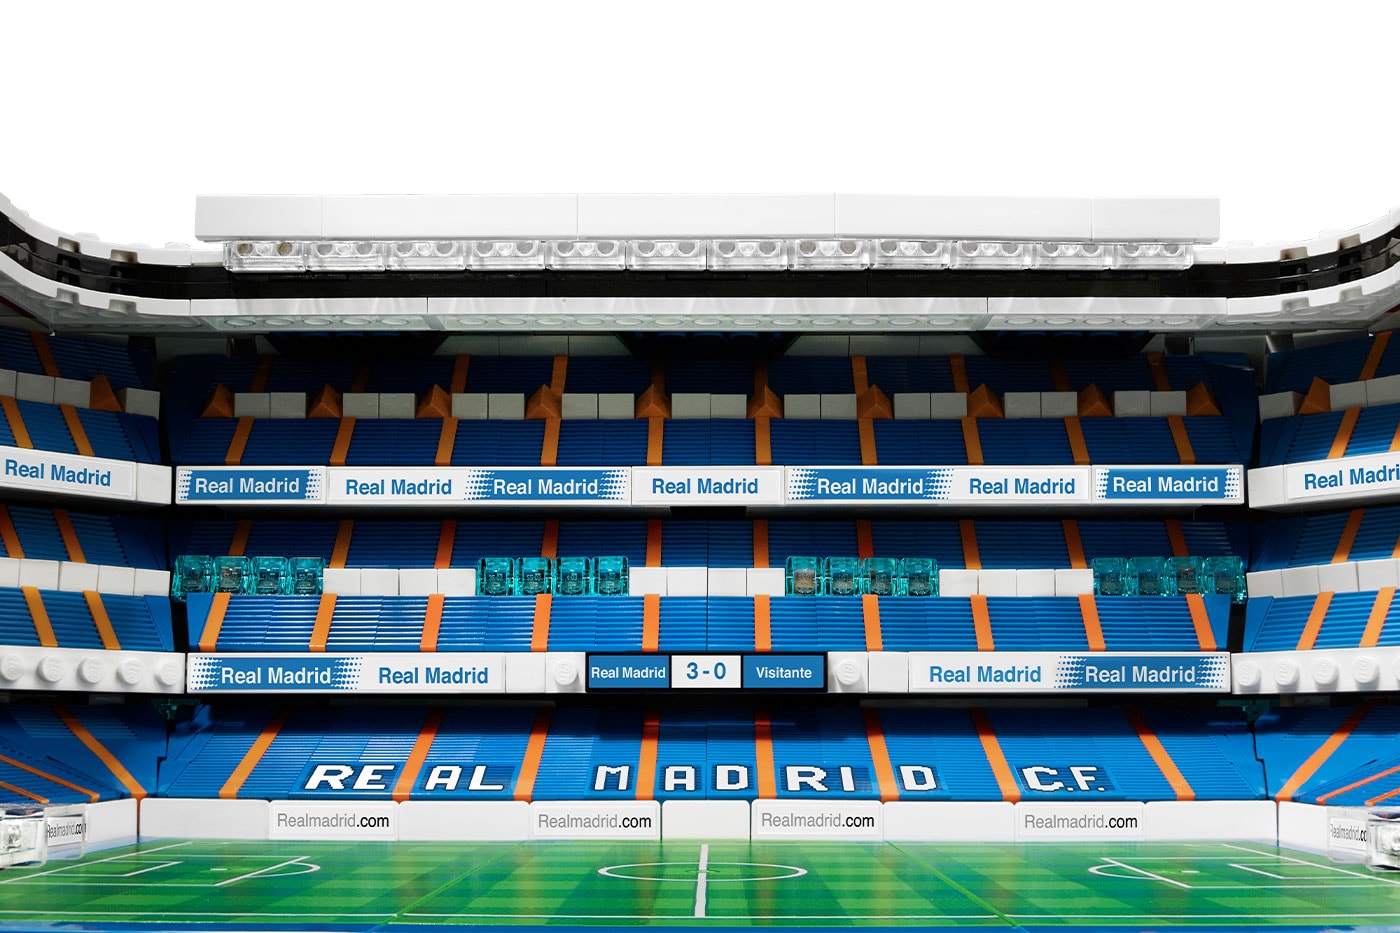 LEGO Releases a Faithful Replica of Real Madrid's Santiago Bernabéu Stadium